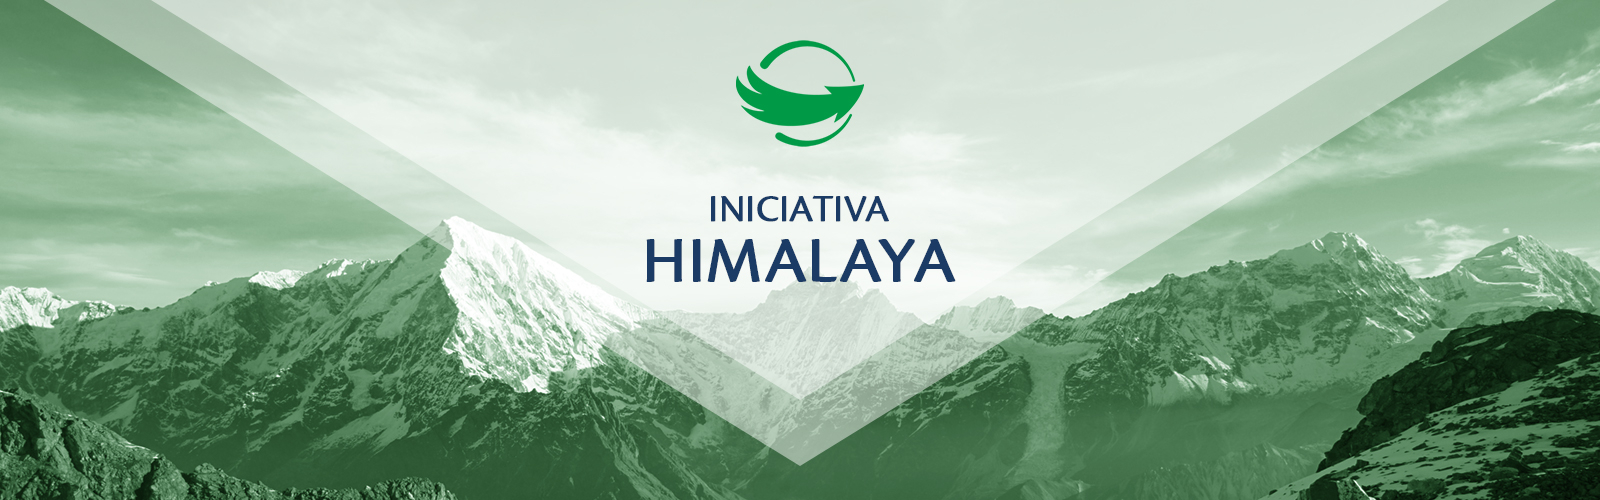 Iniciativa Himalaya